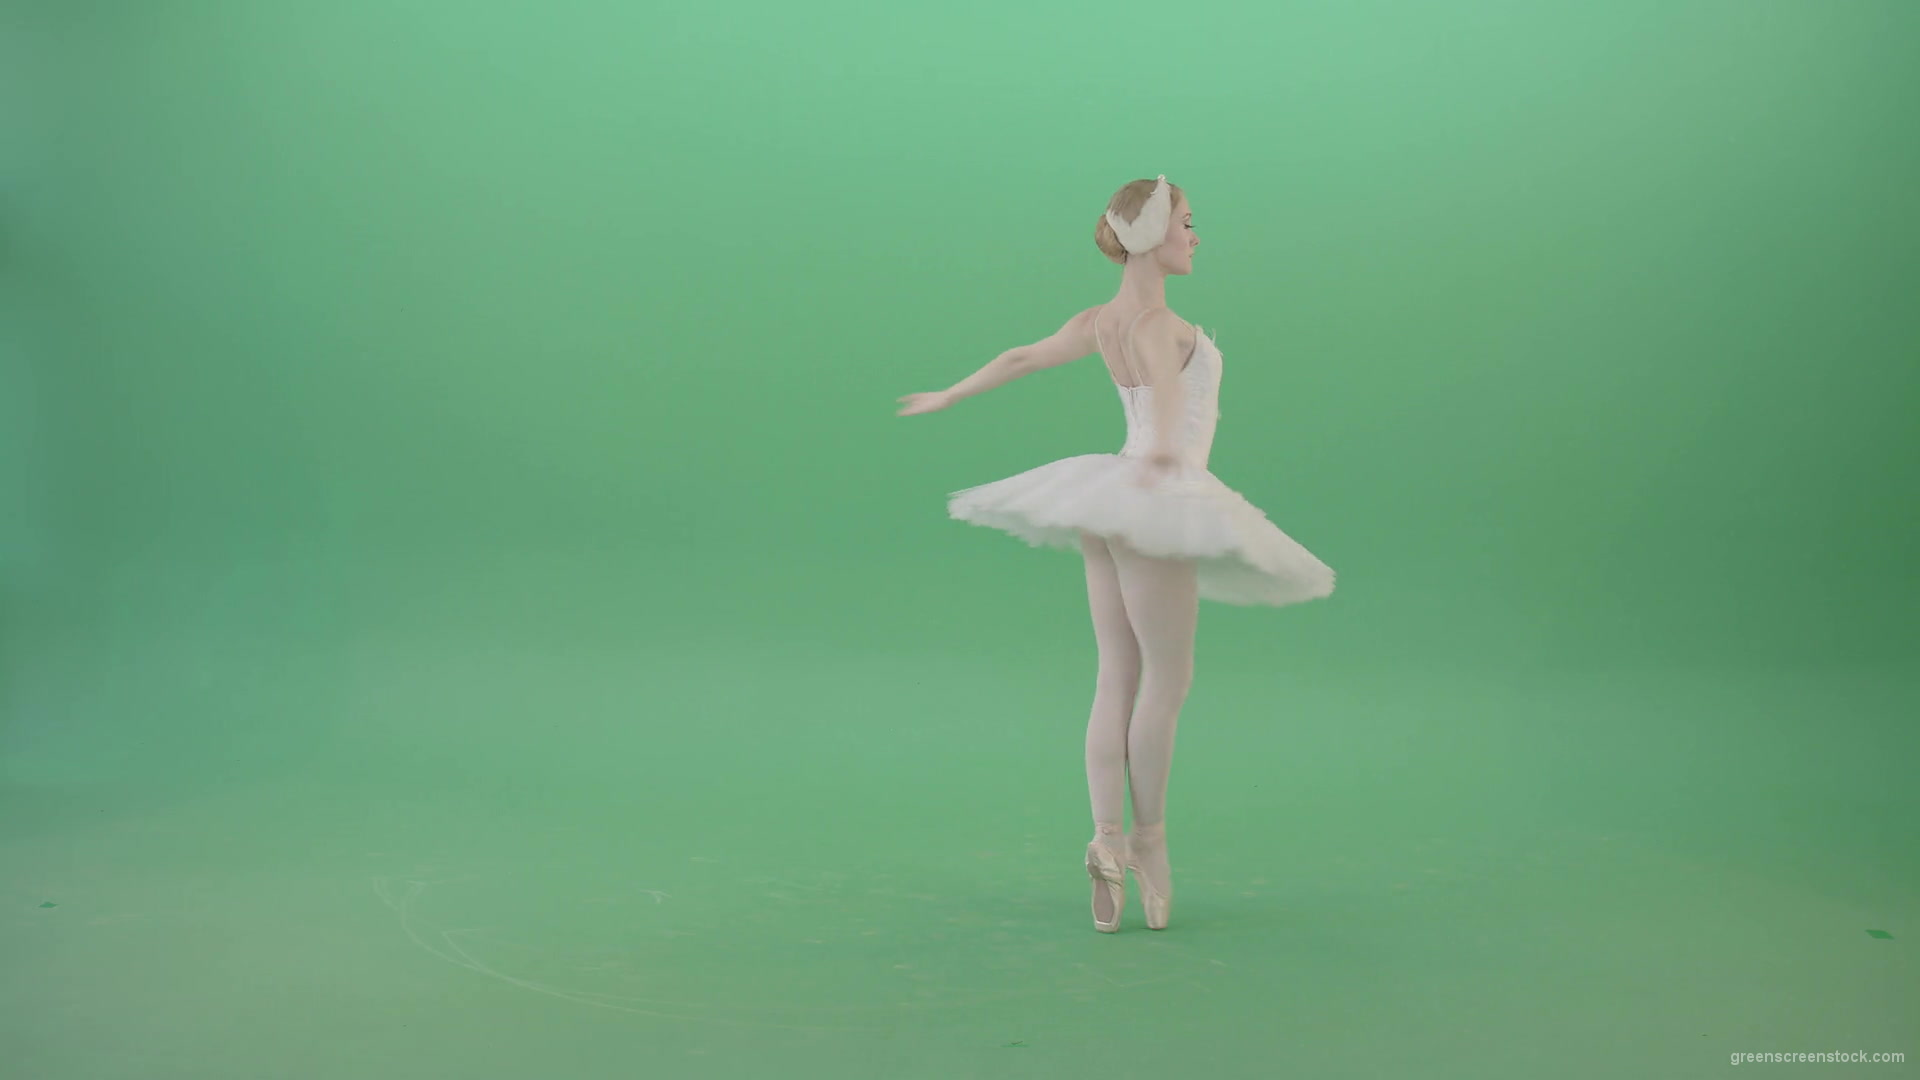 Prima-ballerina-ballet-girl-elegant-dancing-and-spinning-on-green-screen-4K-Video-Footage-1920_006 Green Screen Stock